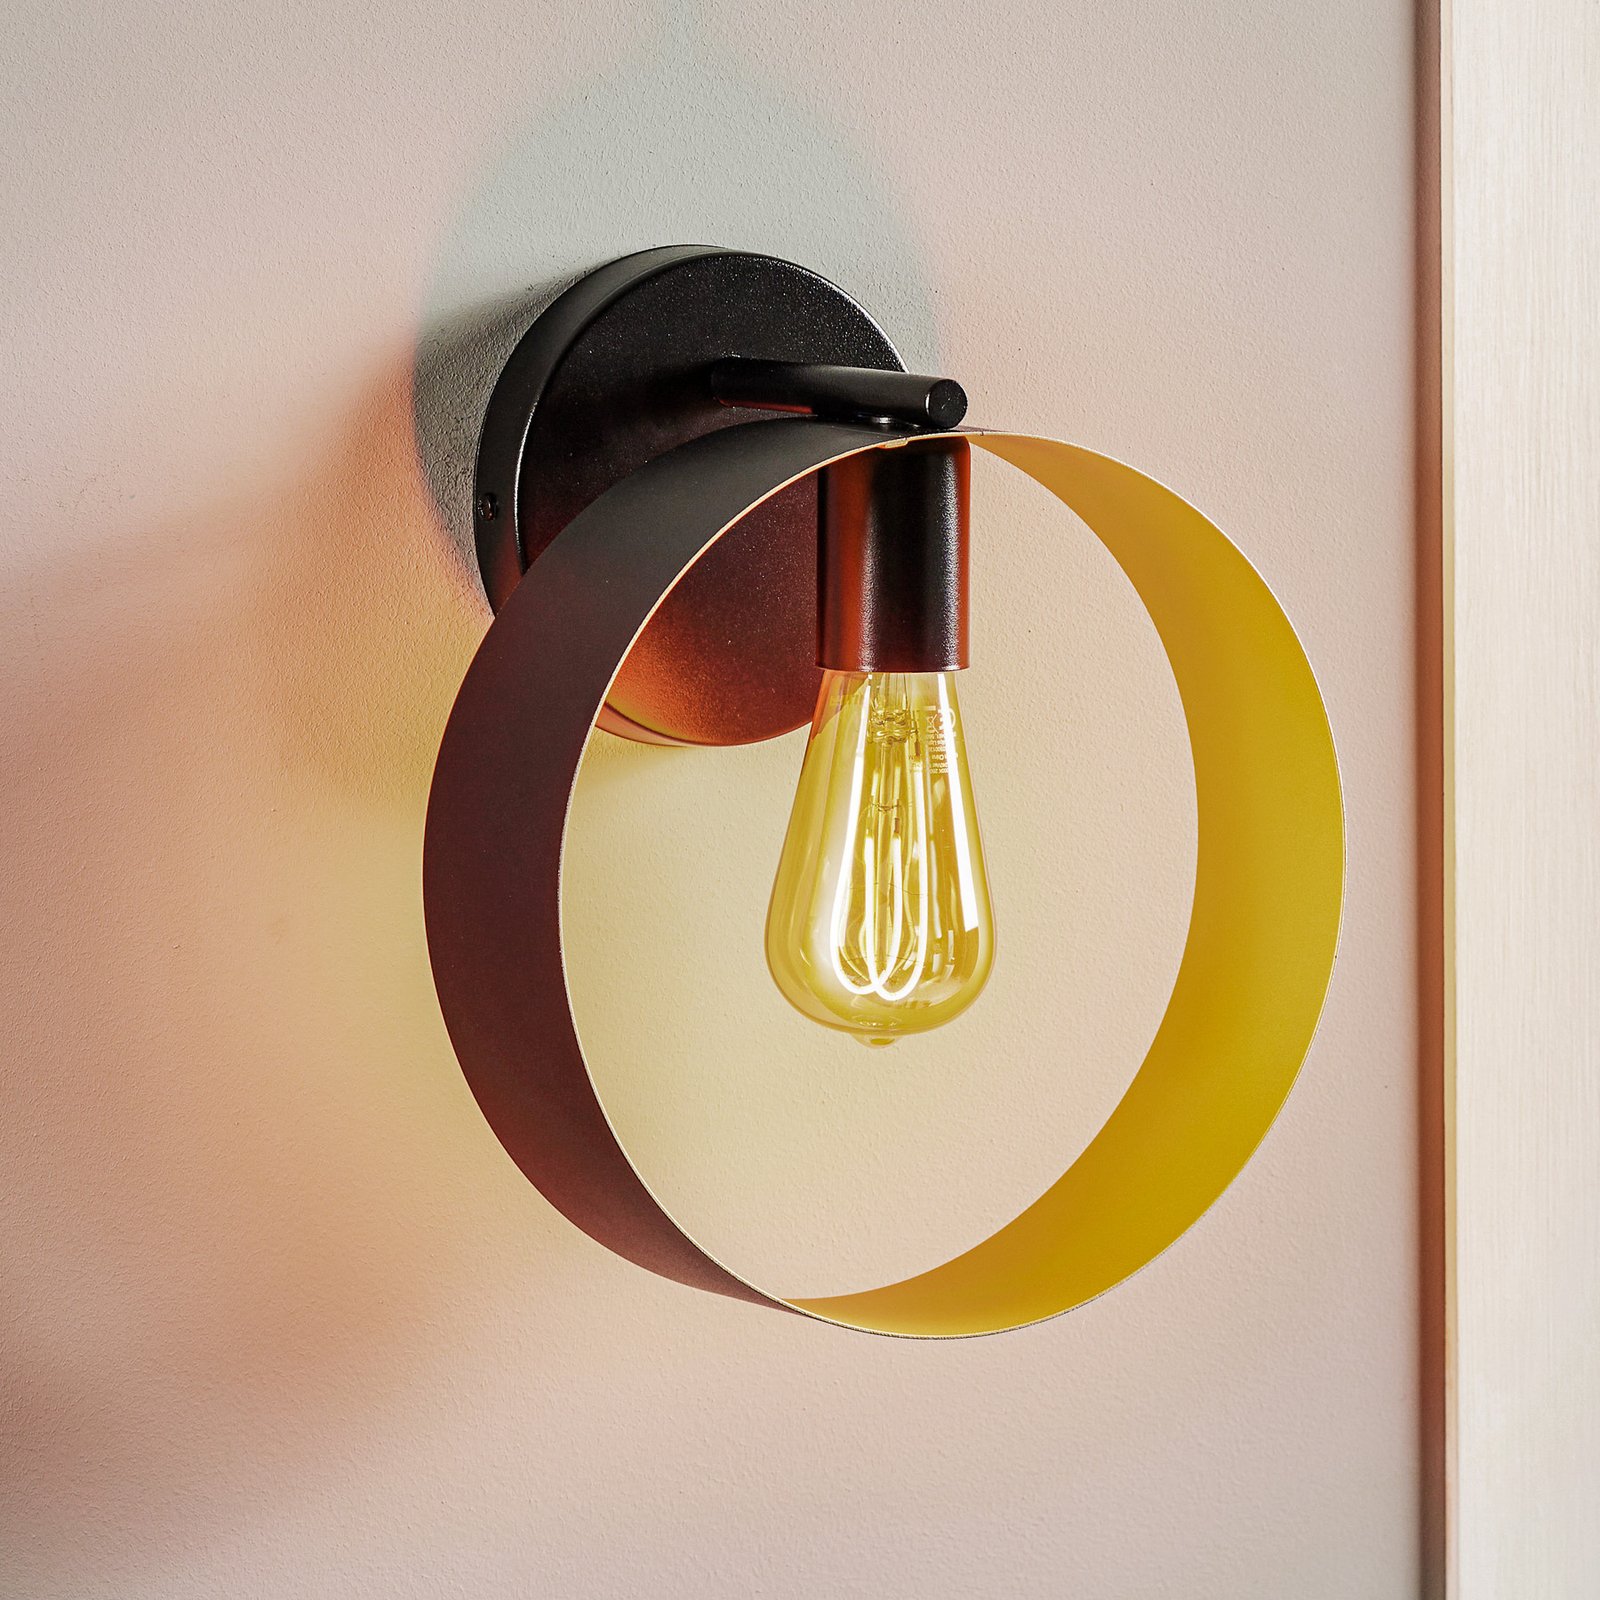 Hula wall light in ring design, black/gold